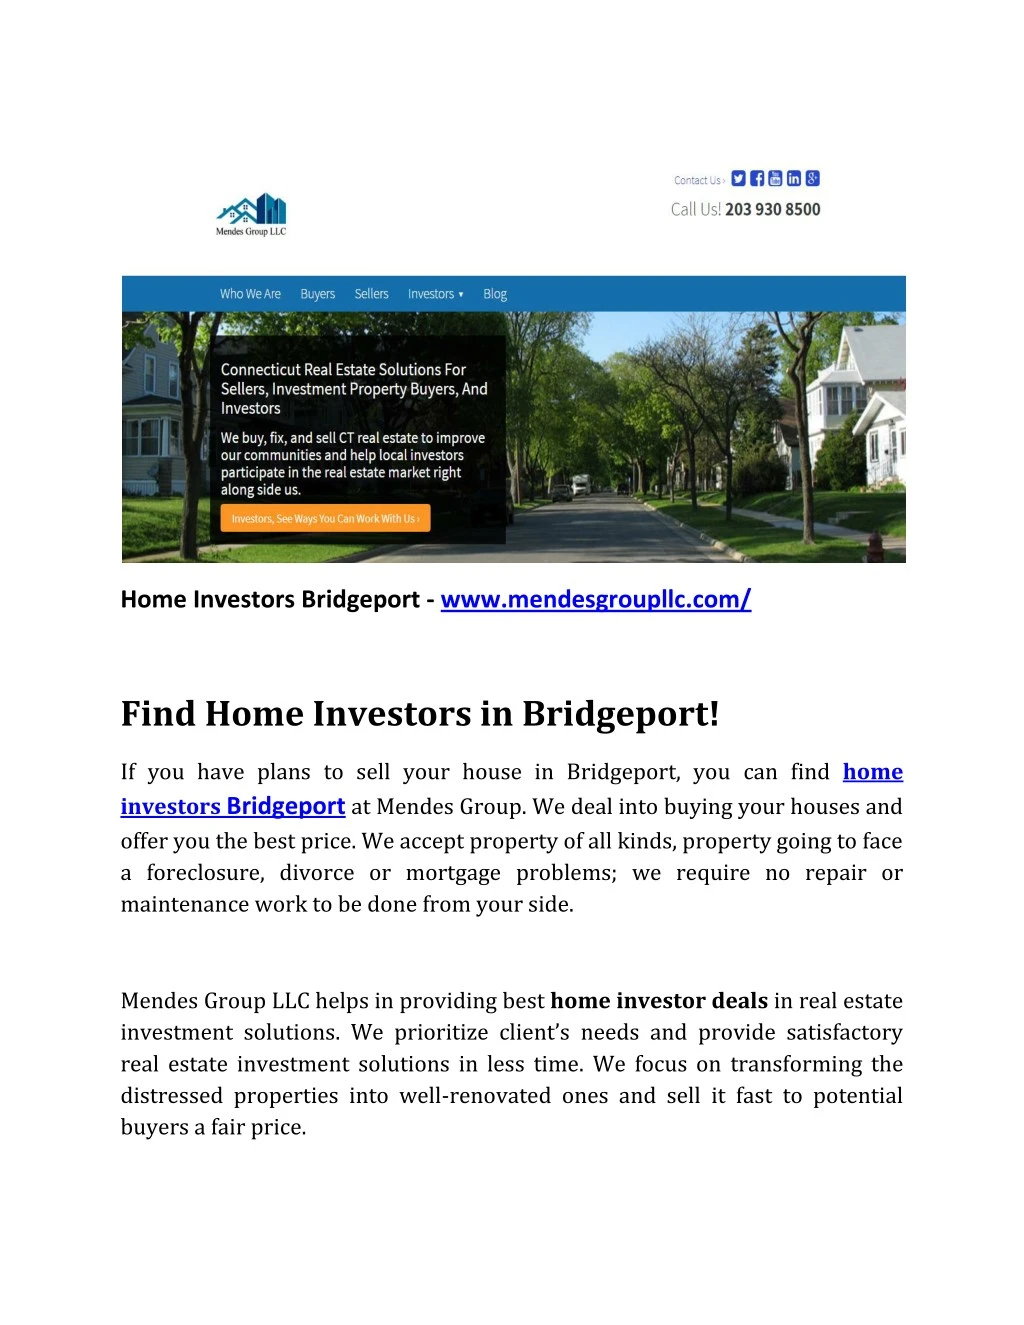 home investors bridgeport www mendesgroupllc com